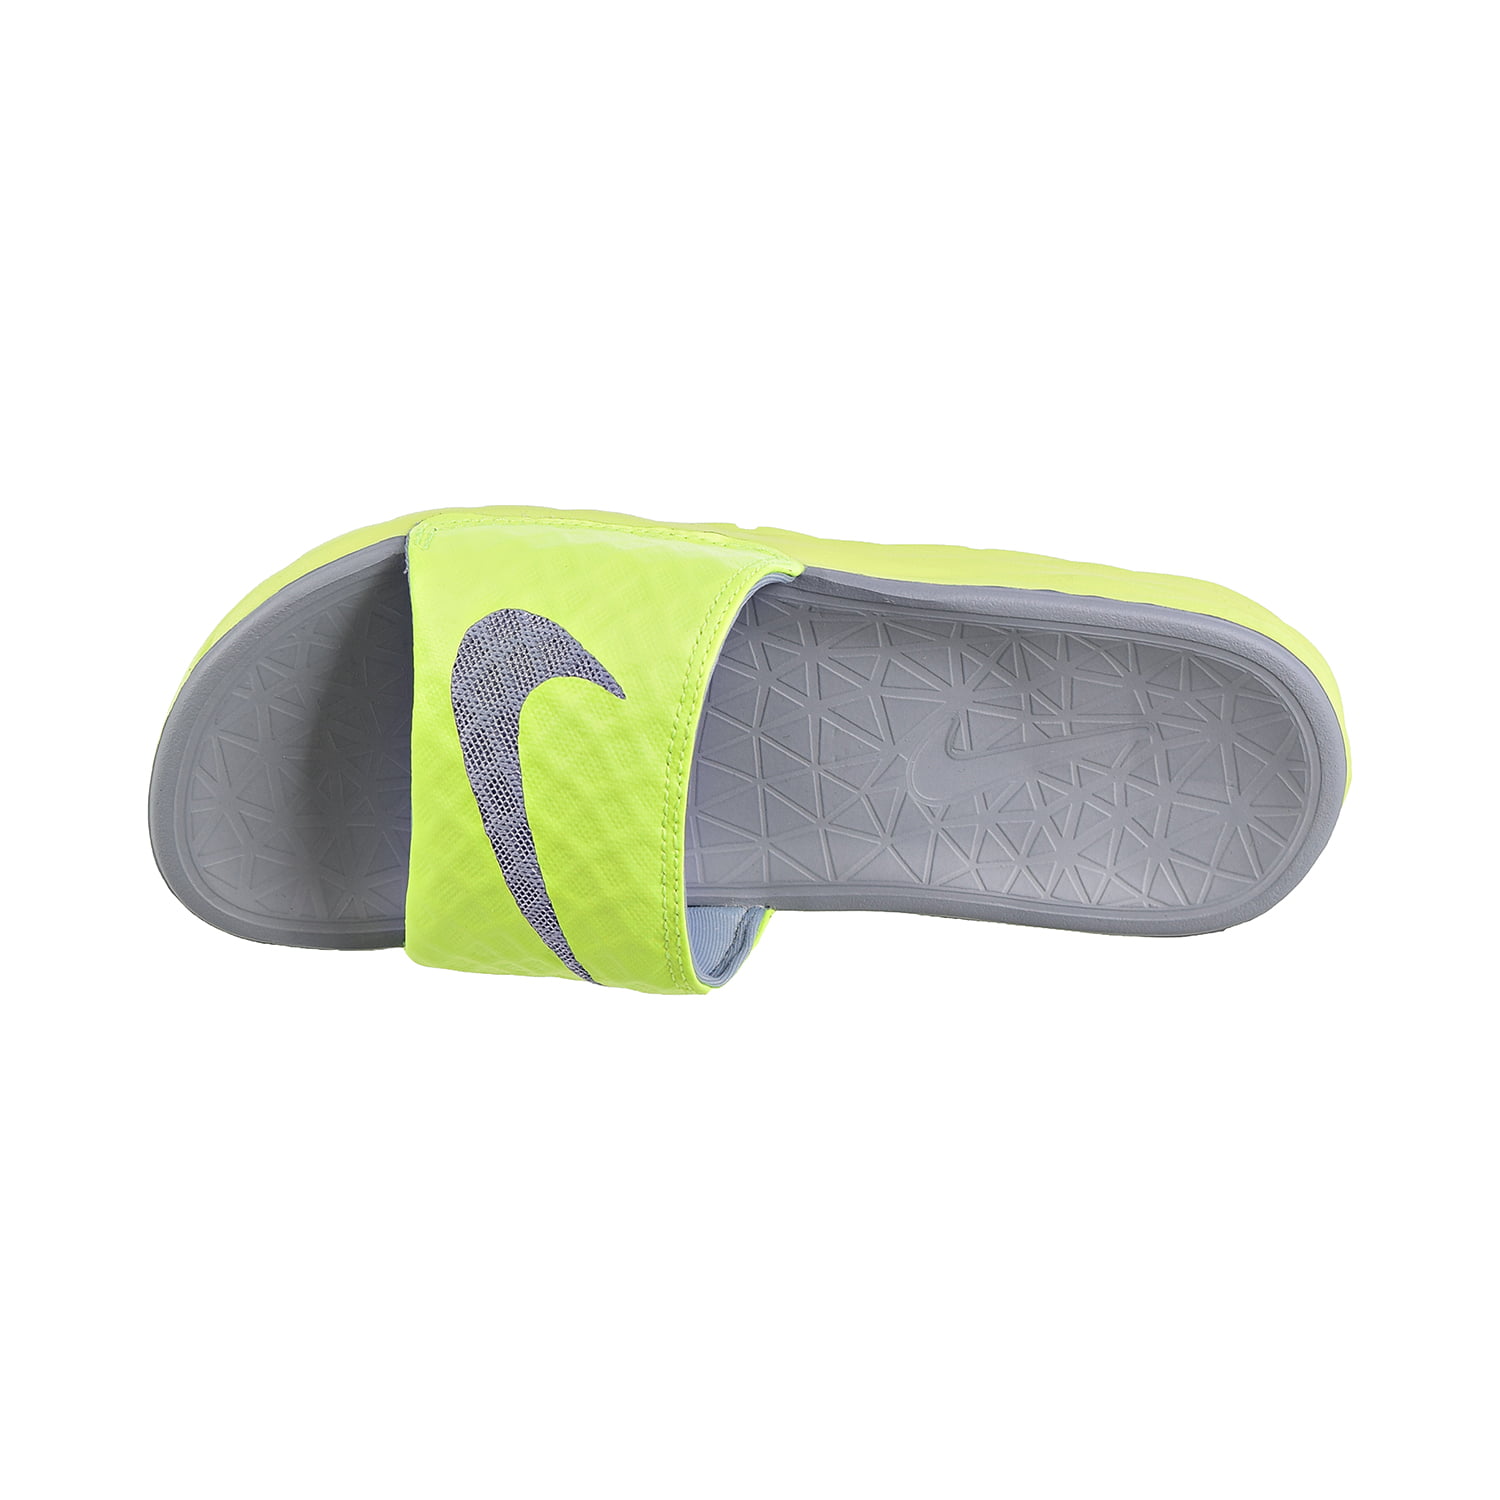 Nike Benassi Solarsoft Slide 2 Men's Sandals Volt/Black/Dove 705474-700 - Walmart.com